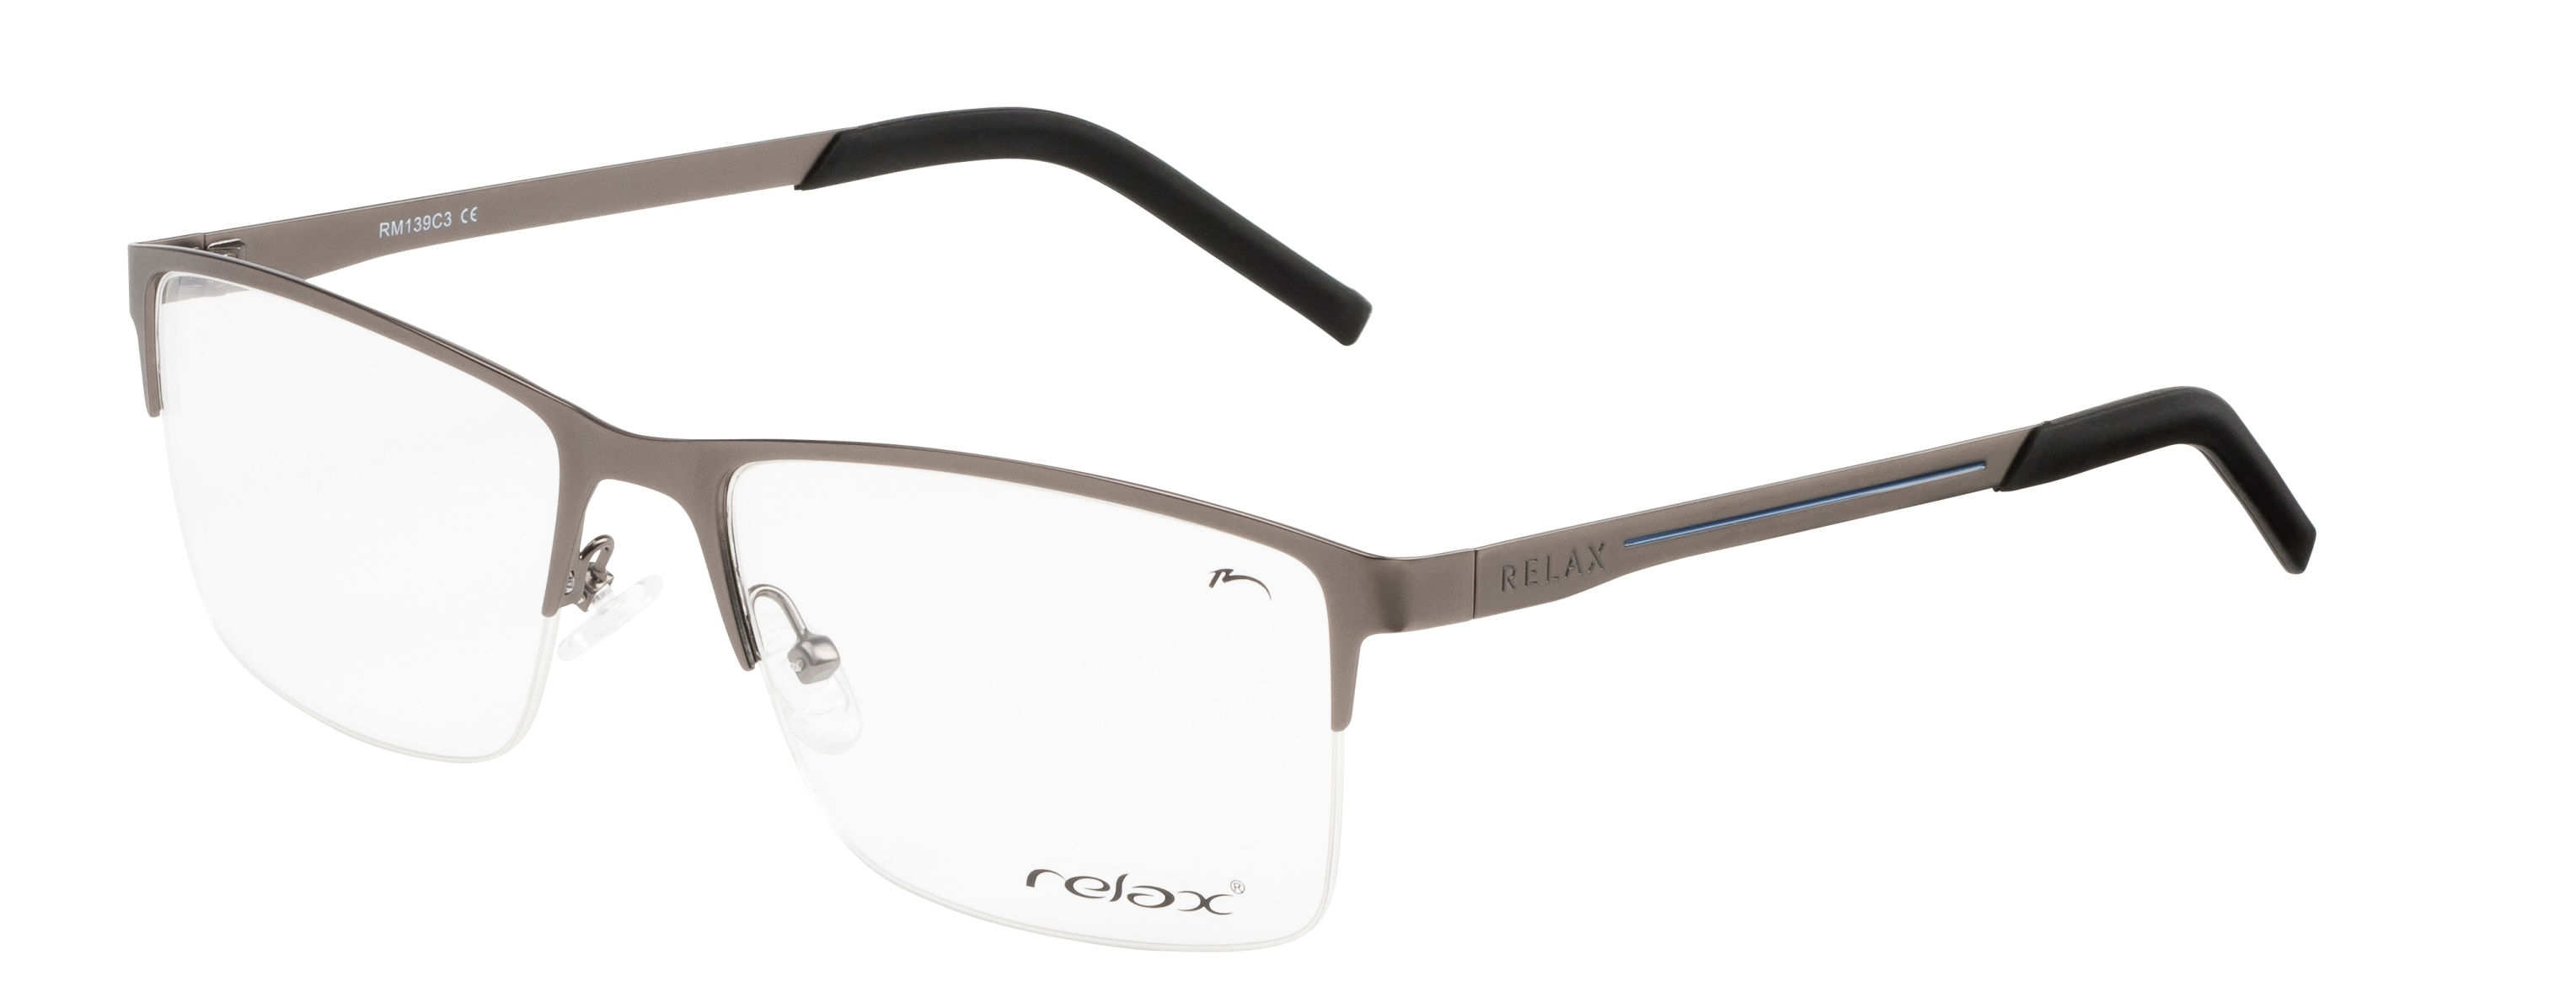 Optical frames Relax Giant RM139C3